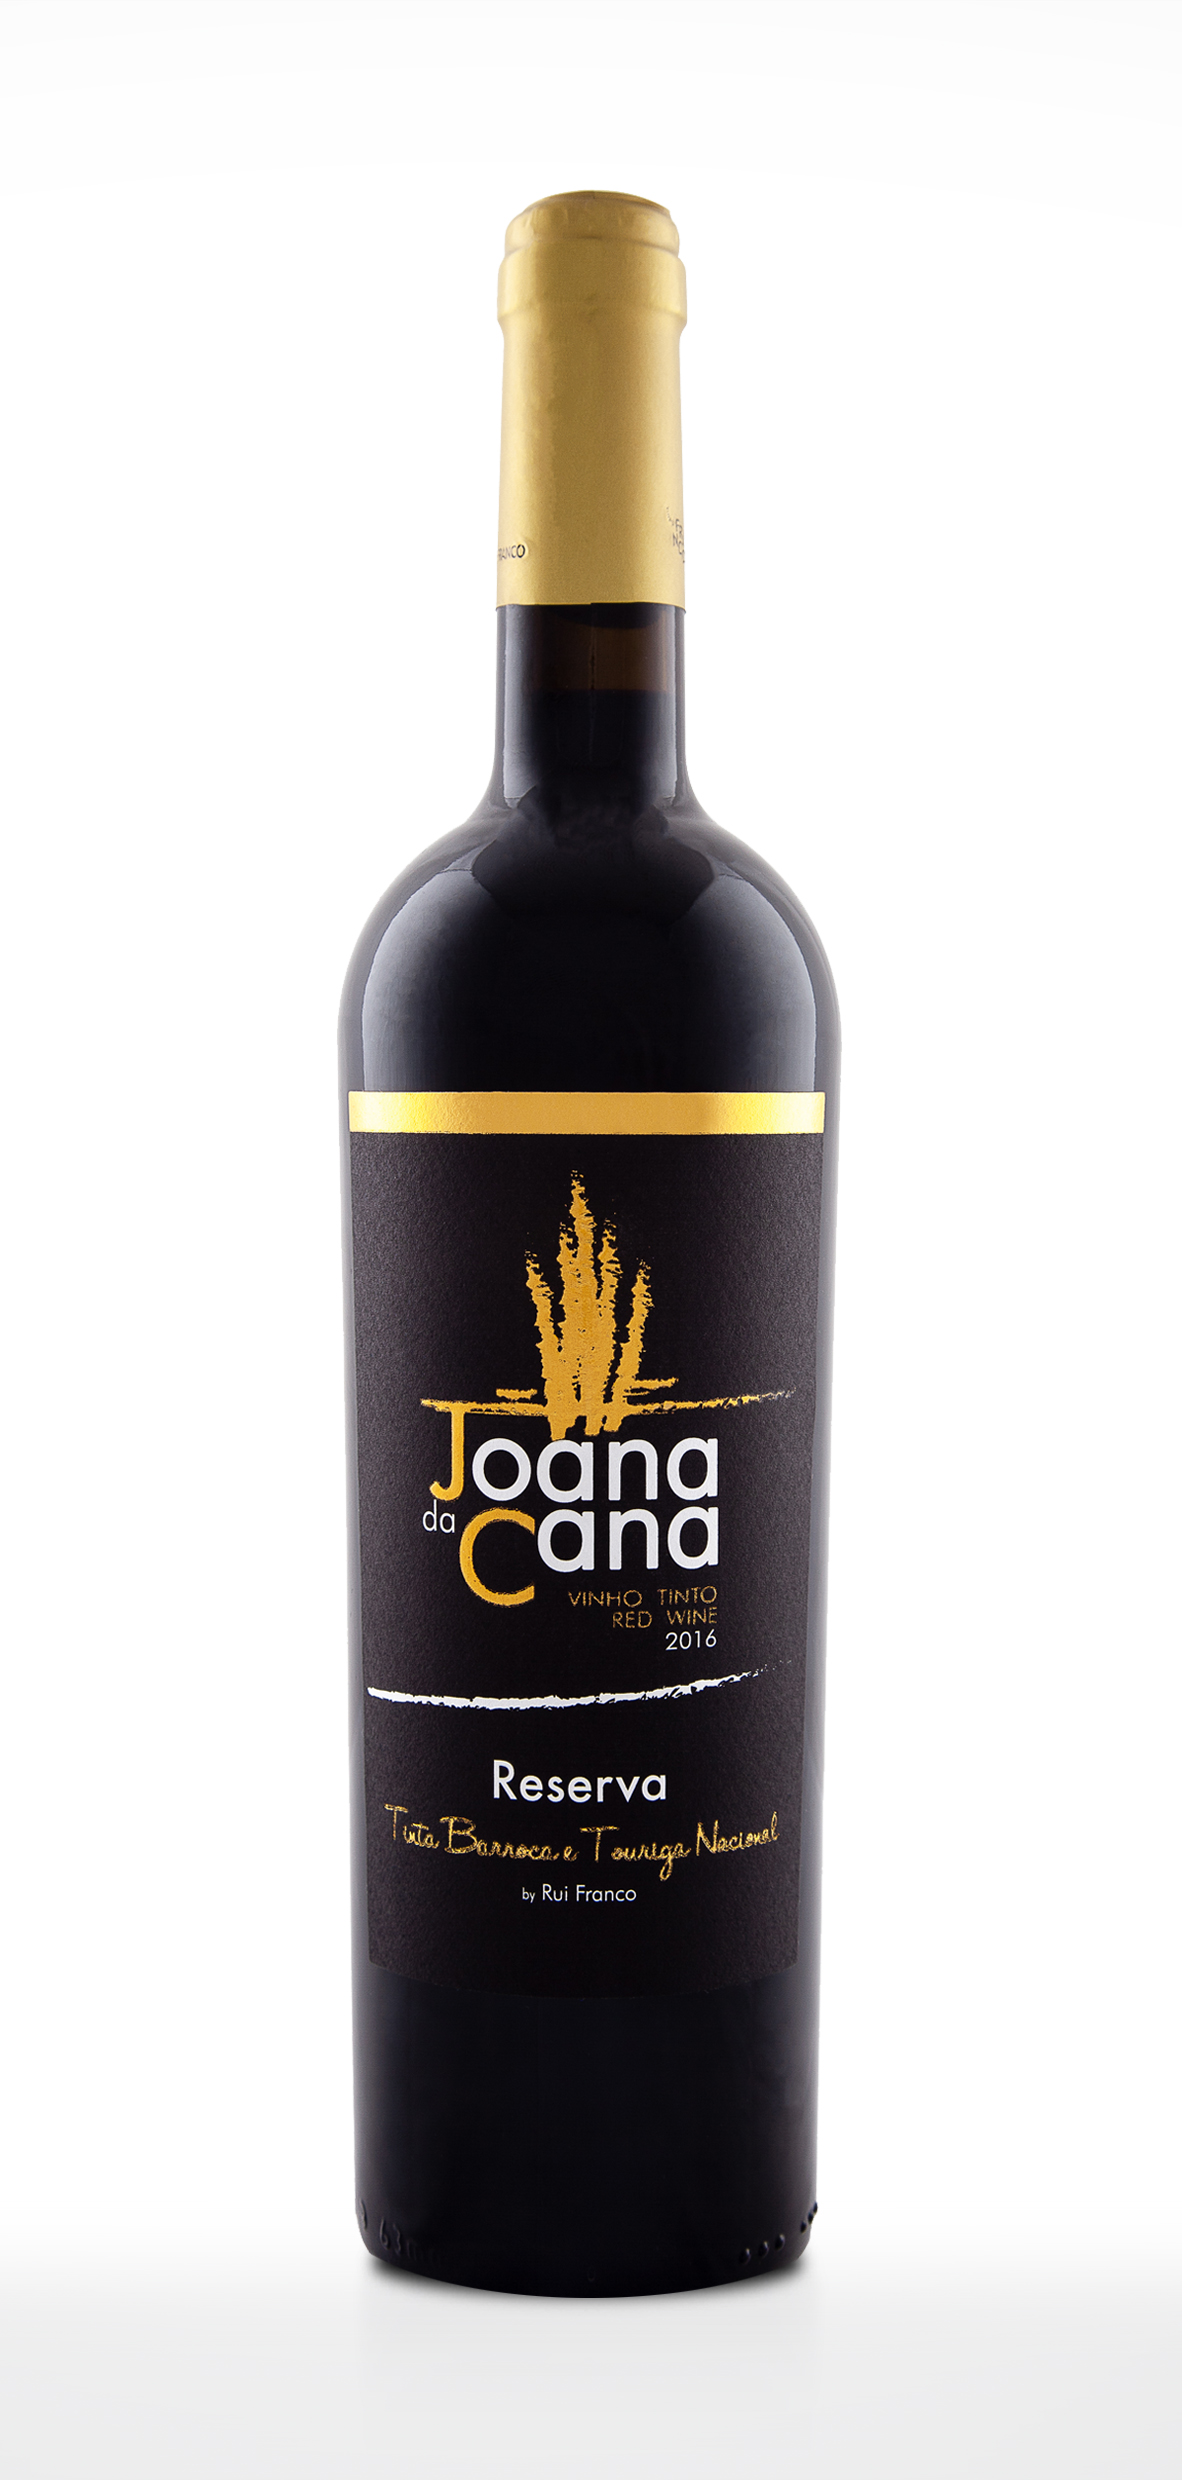 Vinhos Franco - Joana da Cana Reserva tinto 2016 - FOTO